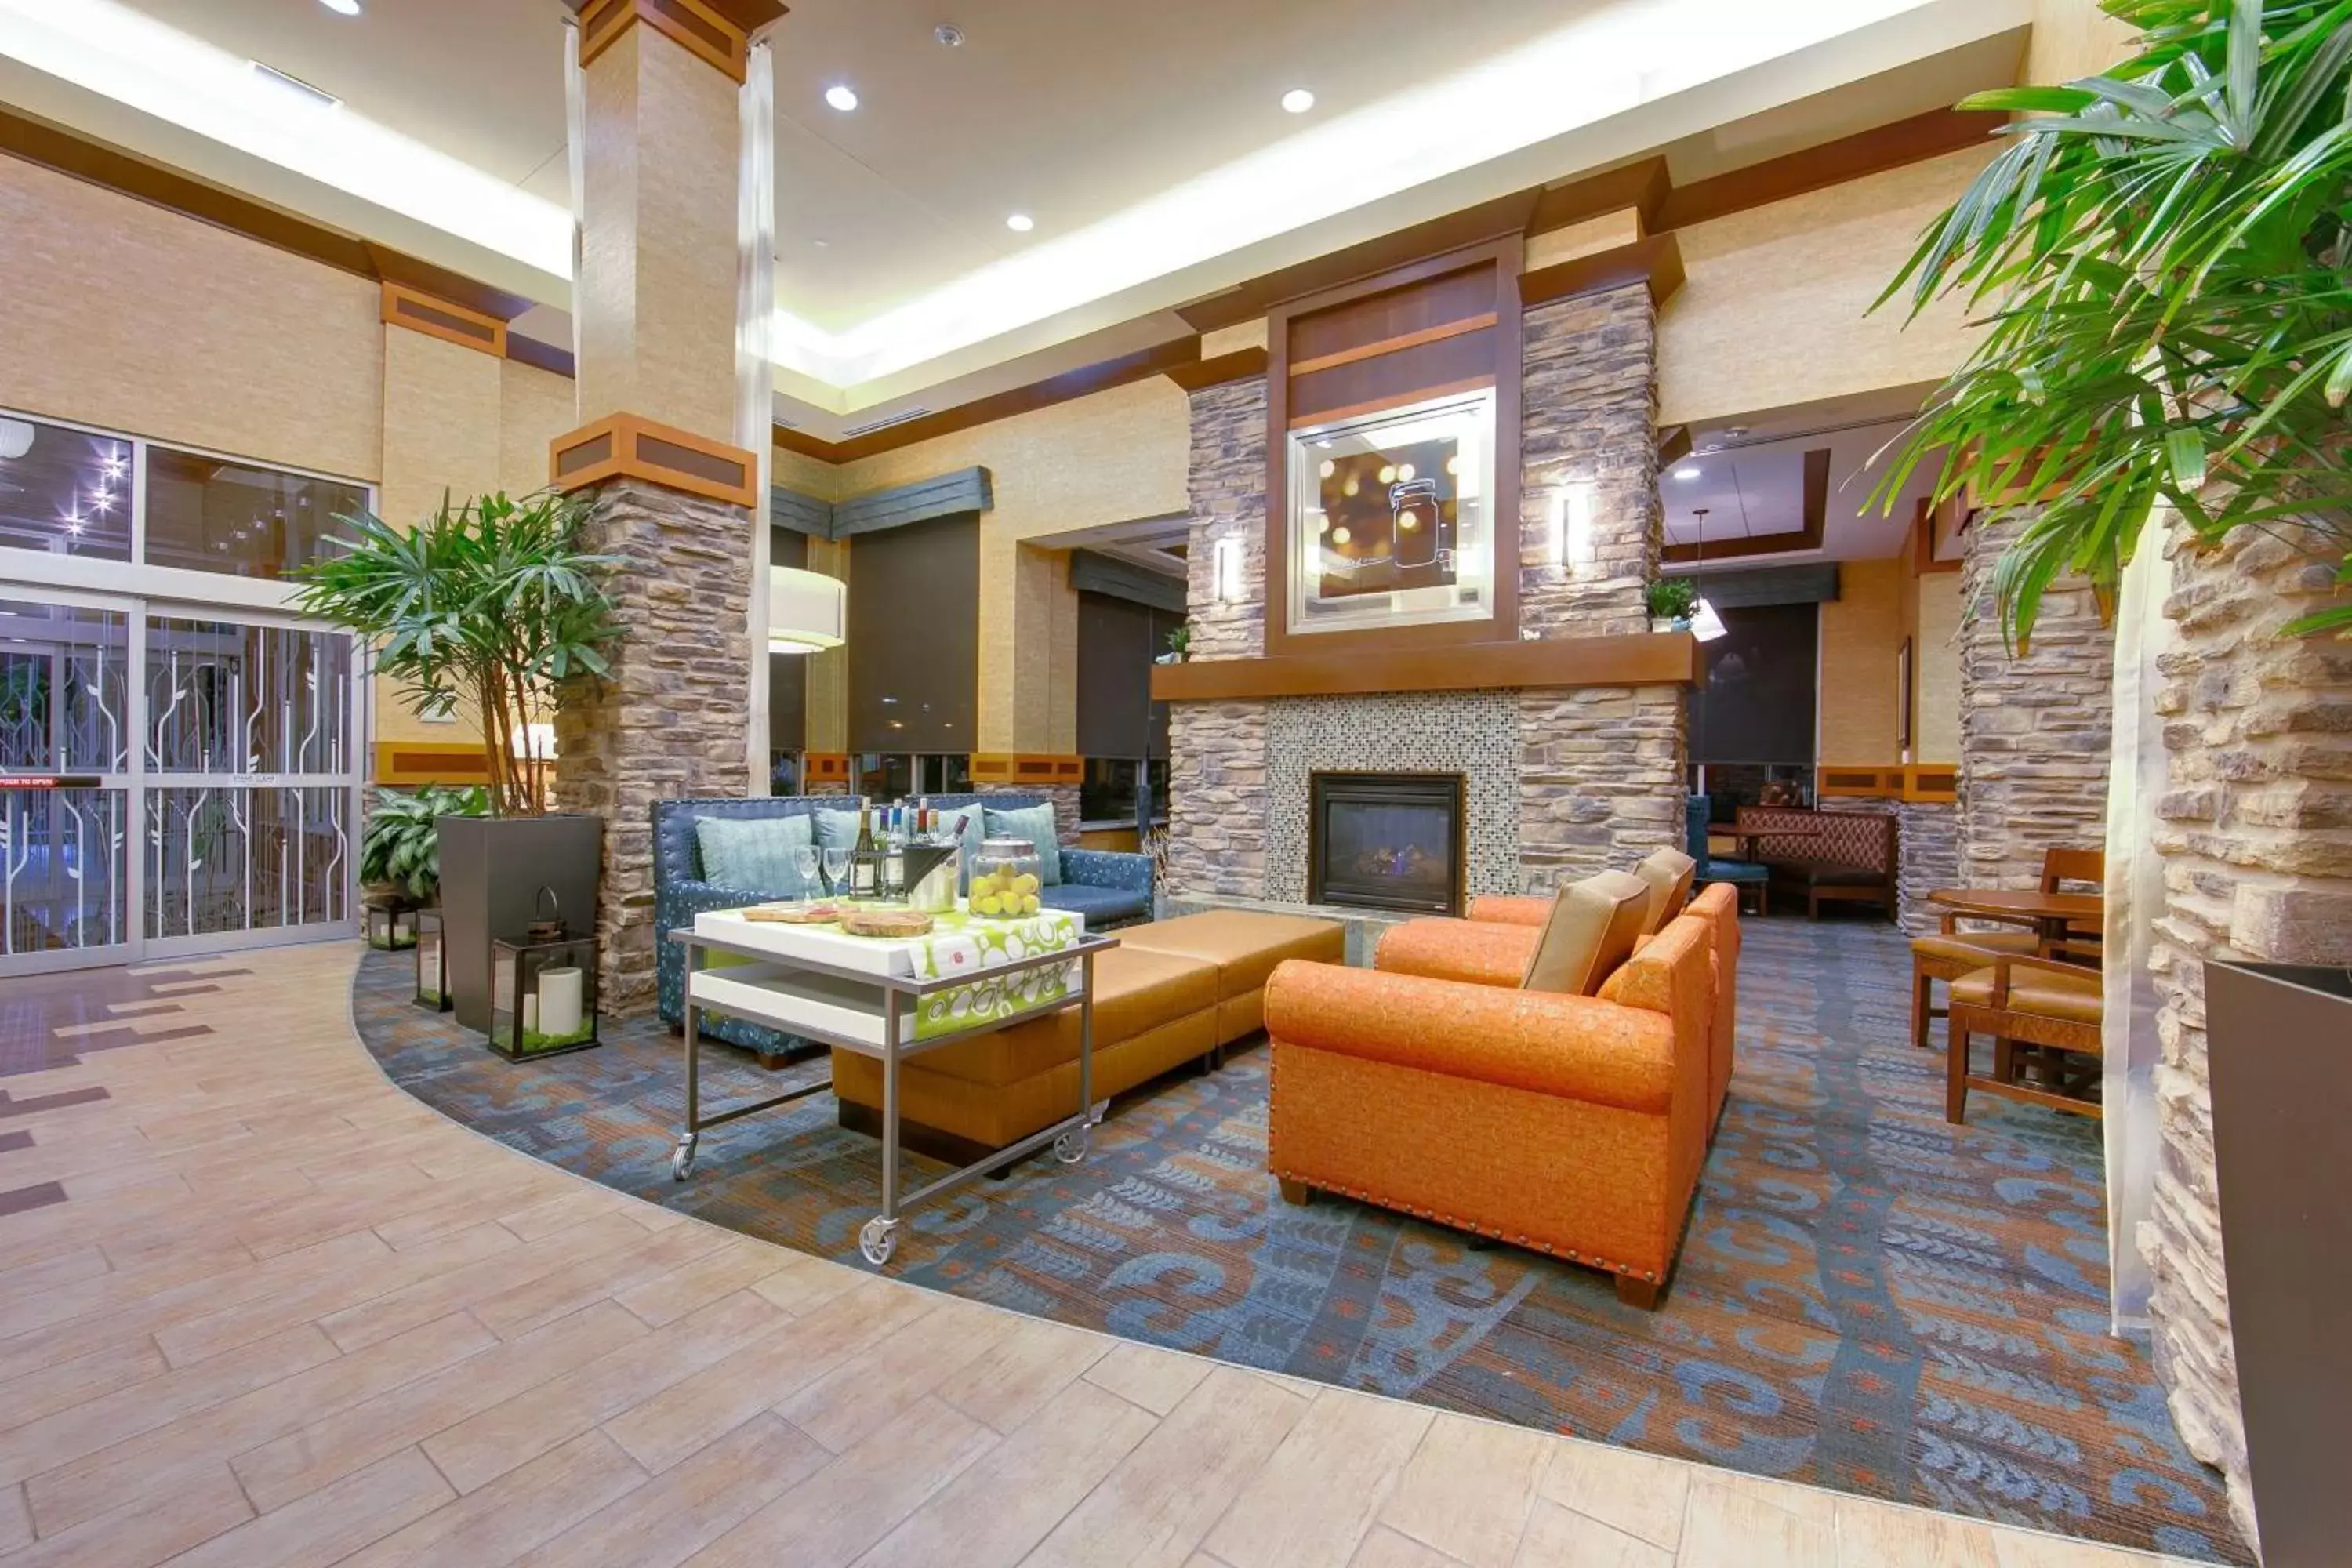 Lobby or reception in Hilton Garden Inn Fort Worth Medical Center